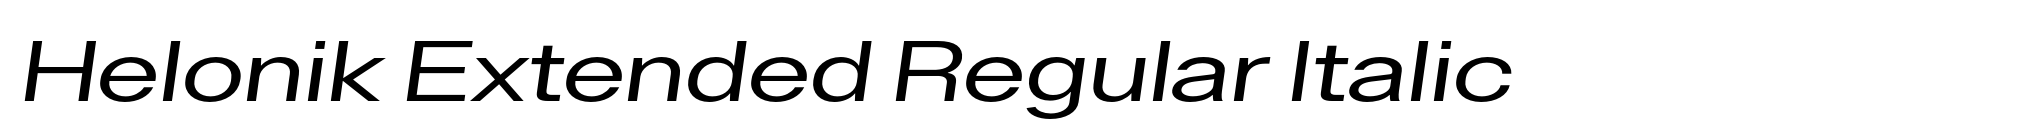 Helonik Extended Regular Italic image